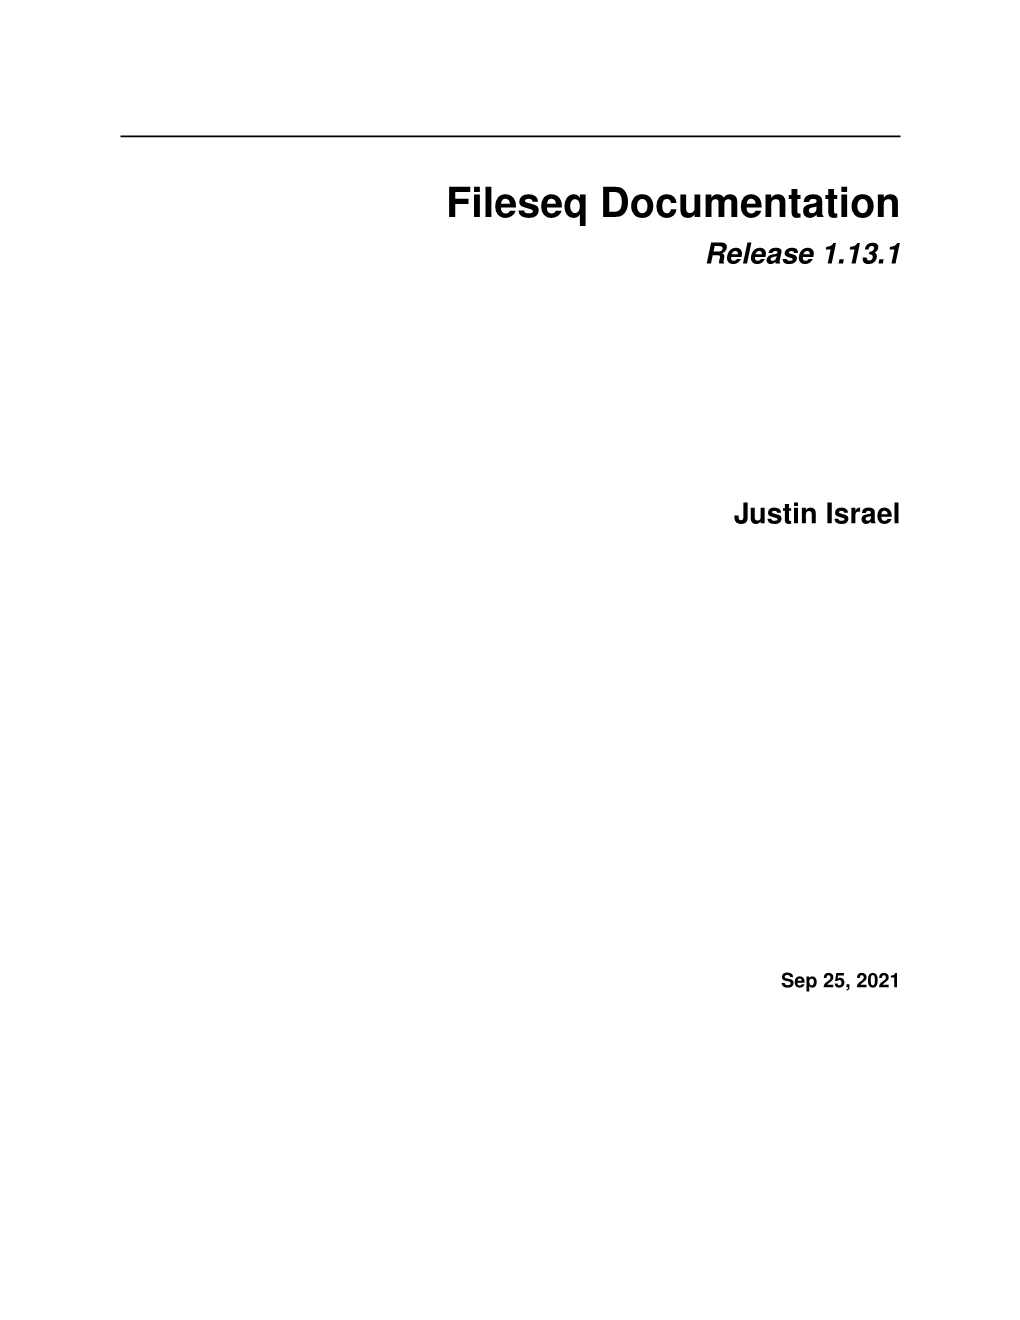 Fileseq Documentation Release 1.13.1